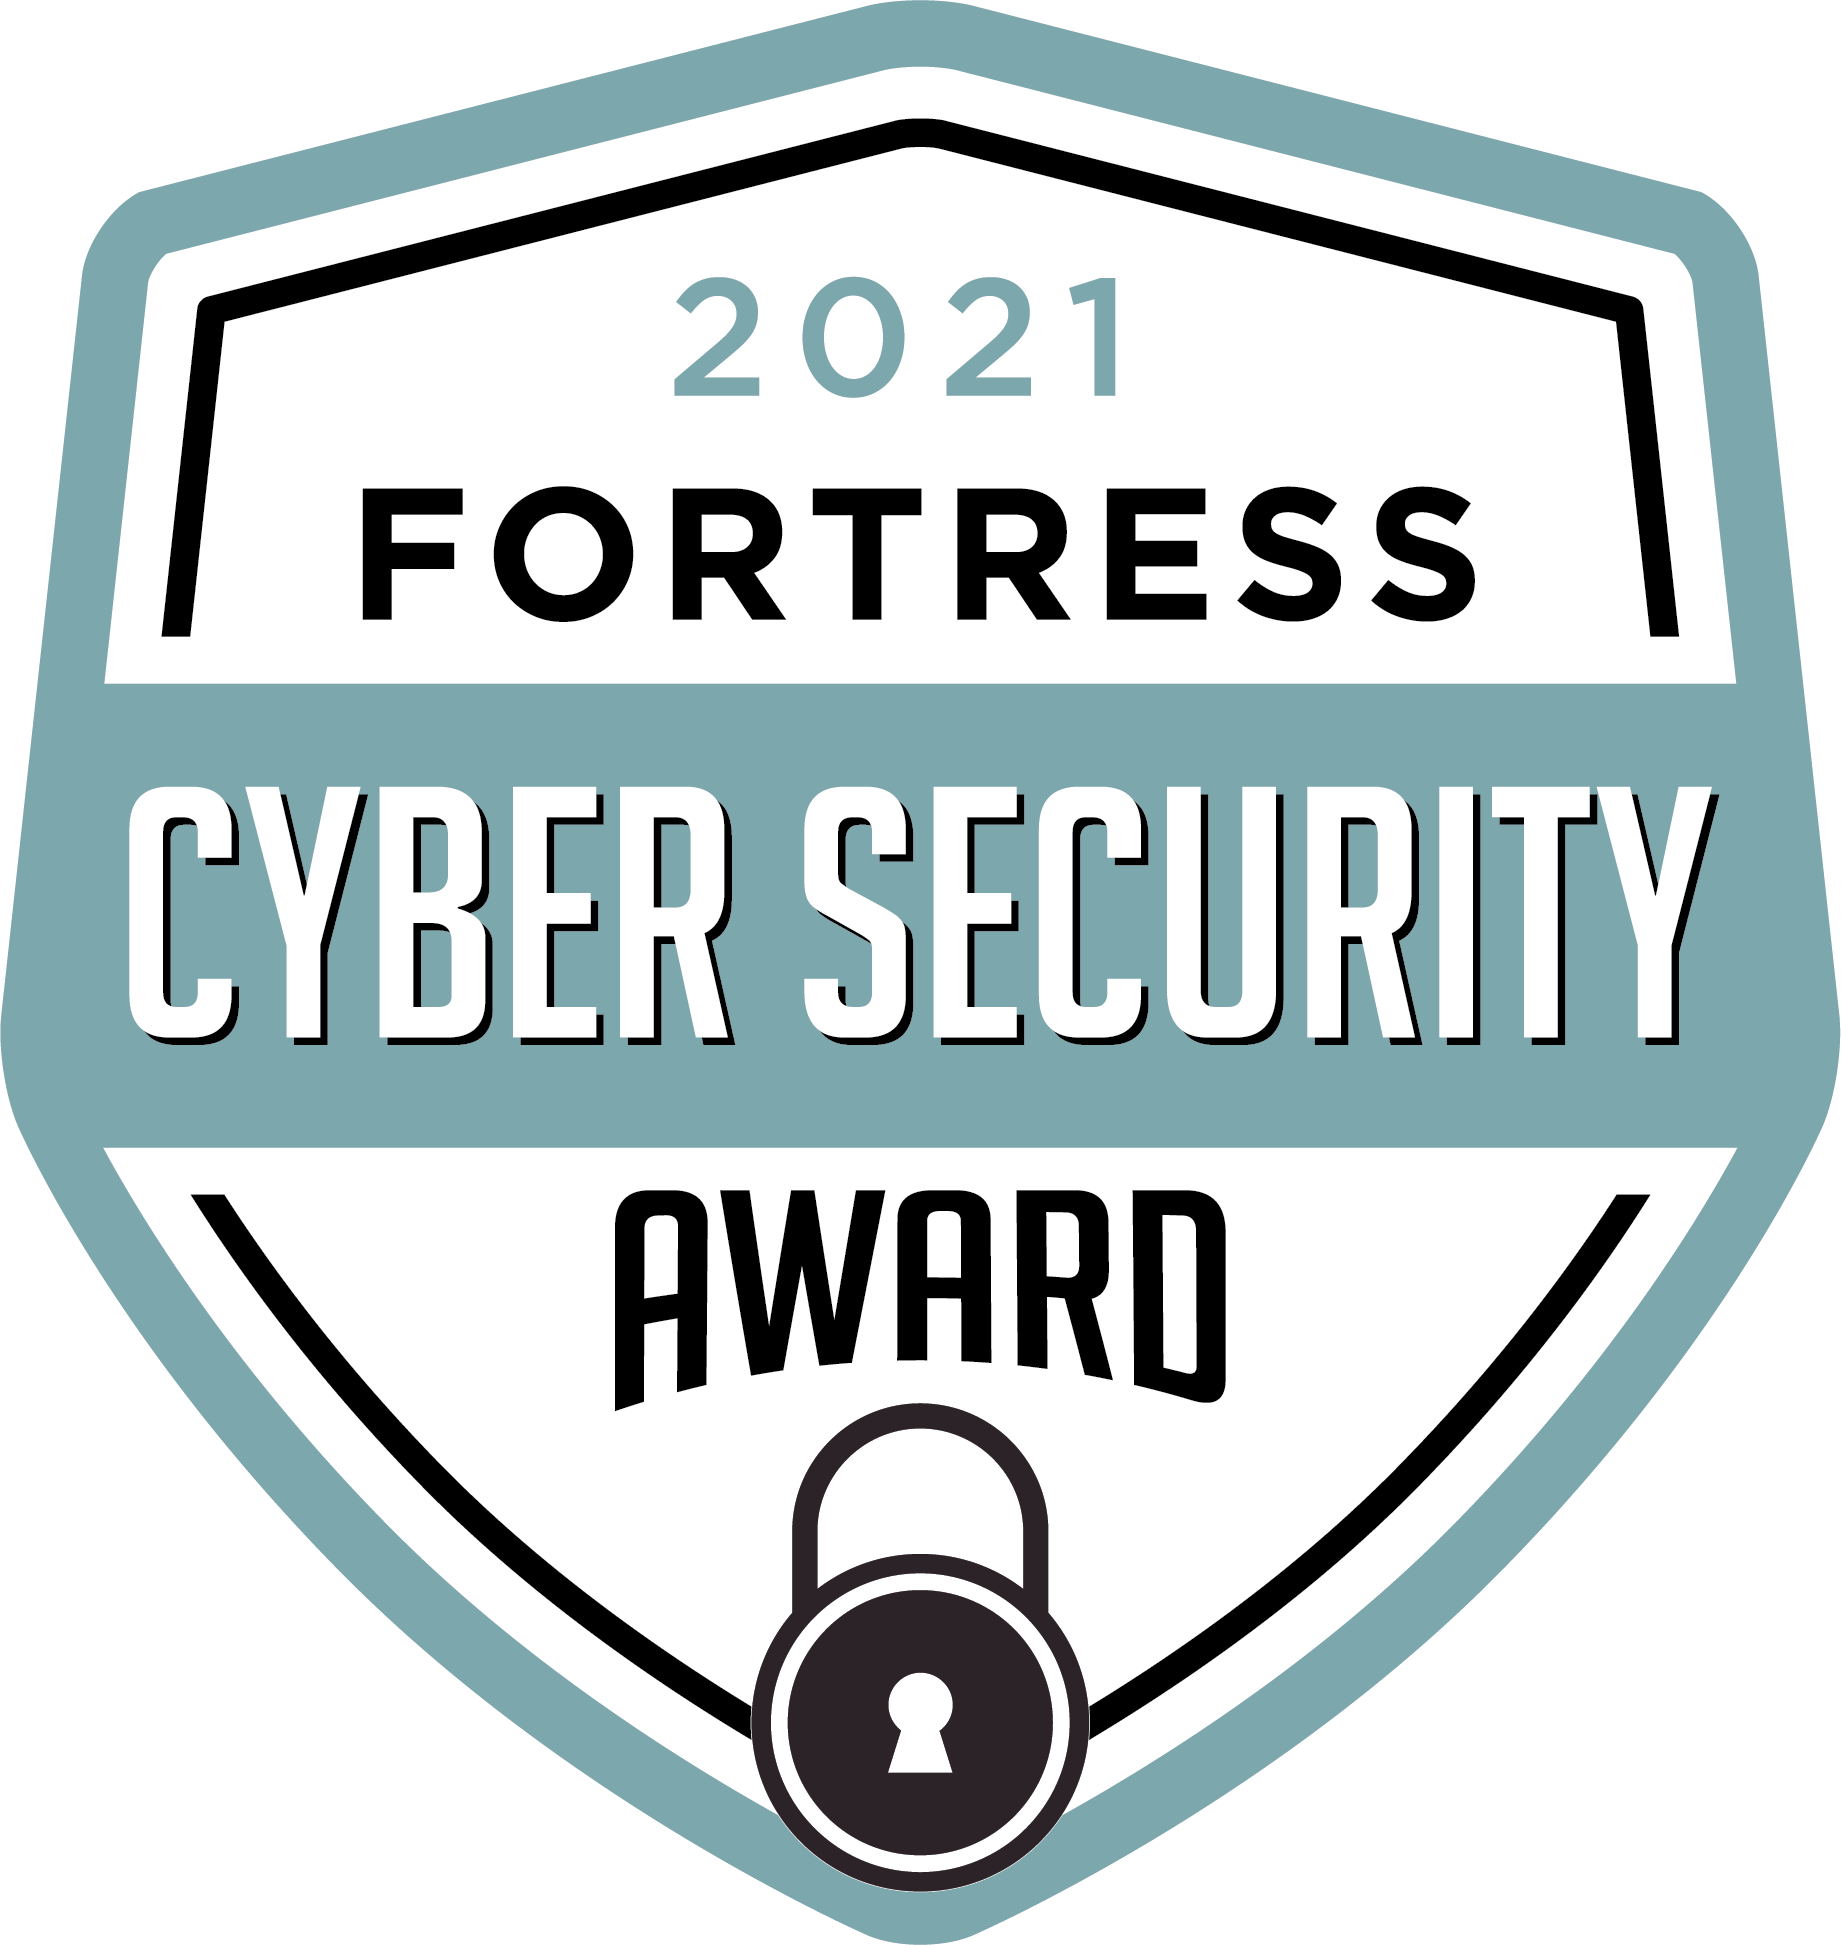 Allied Telesis wins Cyber Security Award 2021